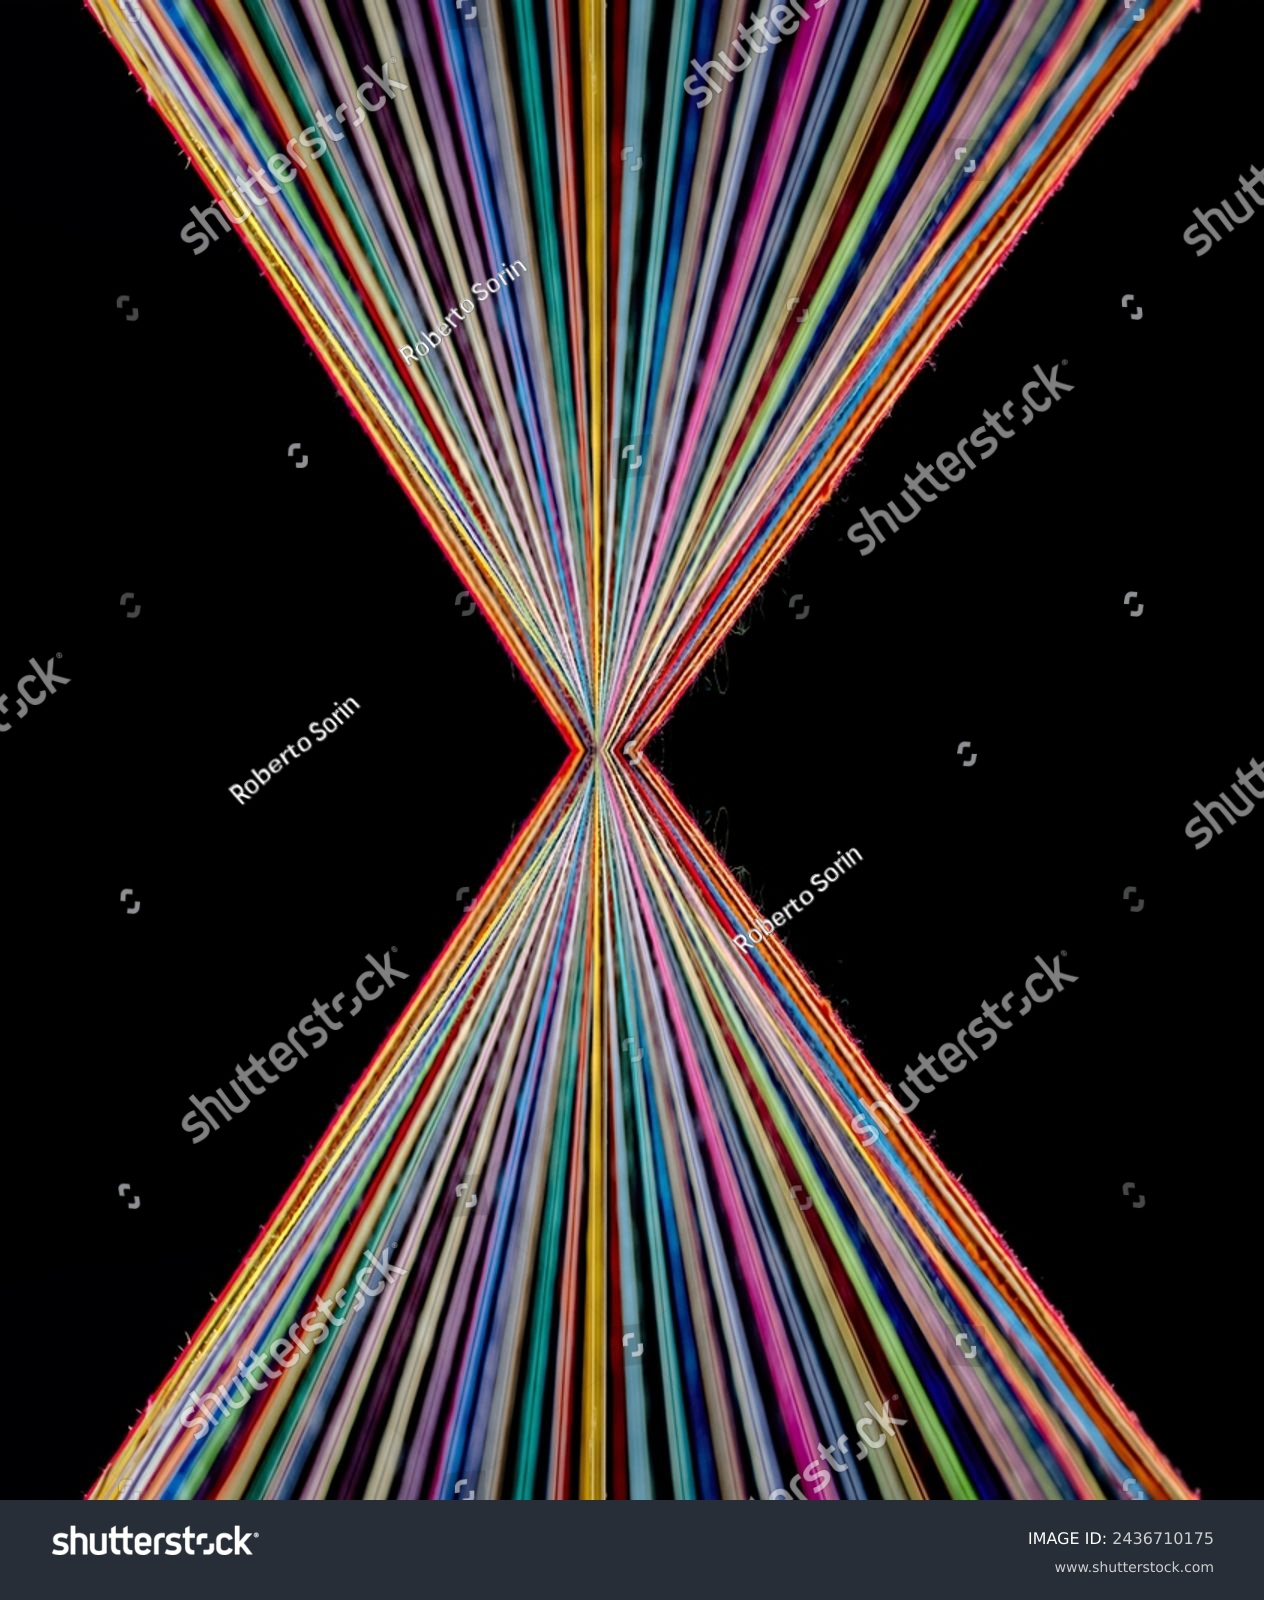 Converging Rainbow Colored Threads on dark background #2436710175